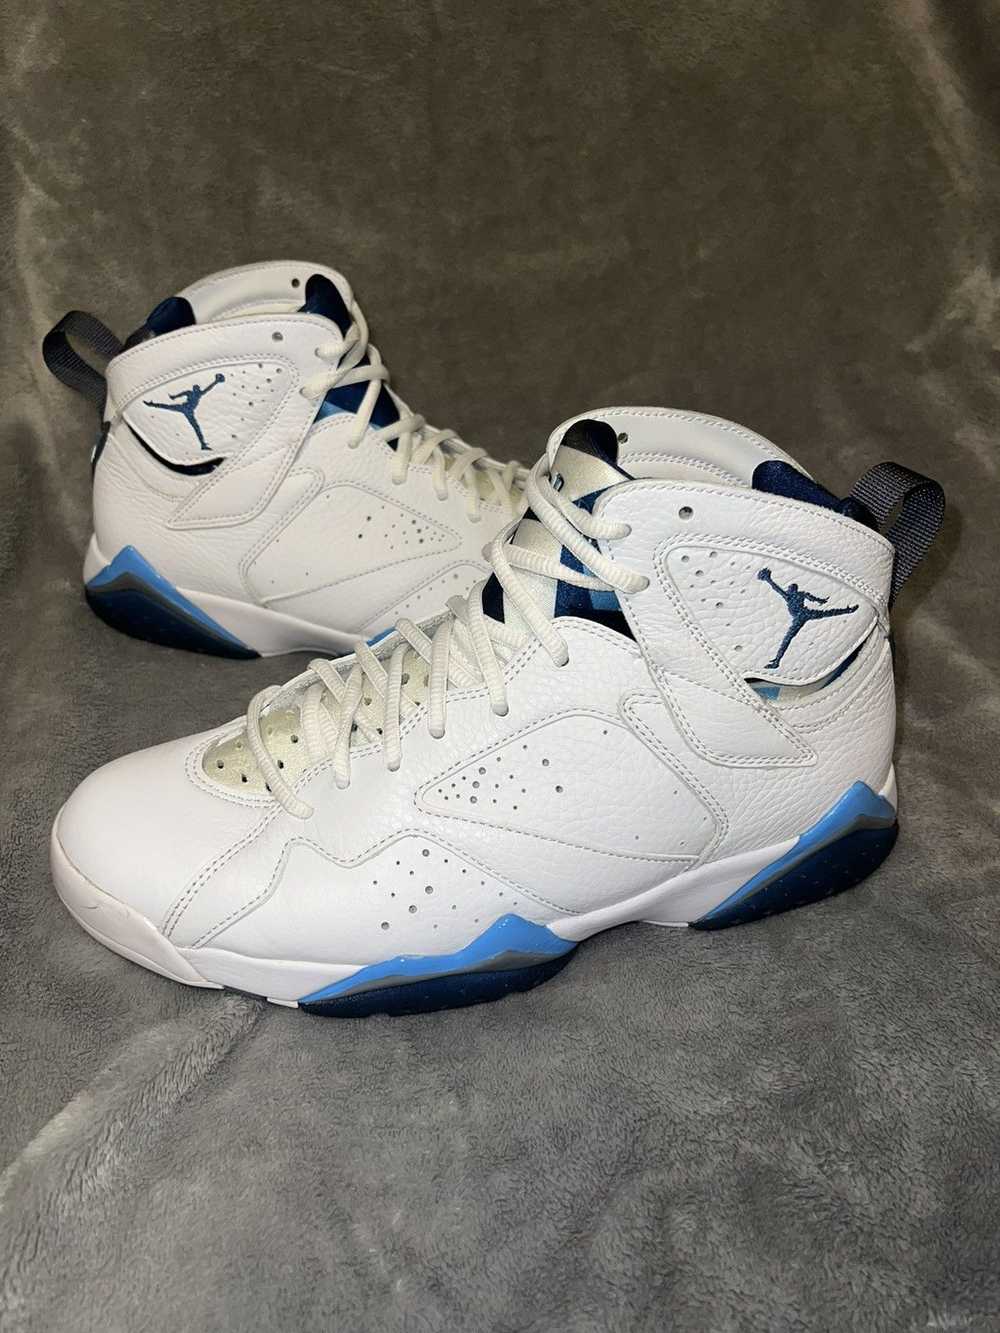 Jordan Brand × Nike Jordan 7 “French Blue” - image 4